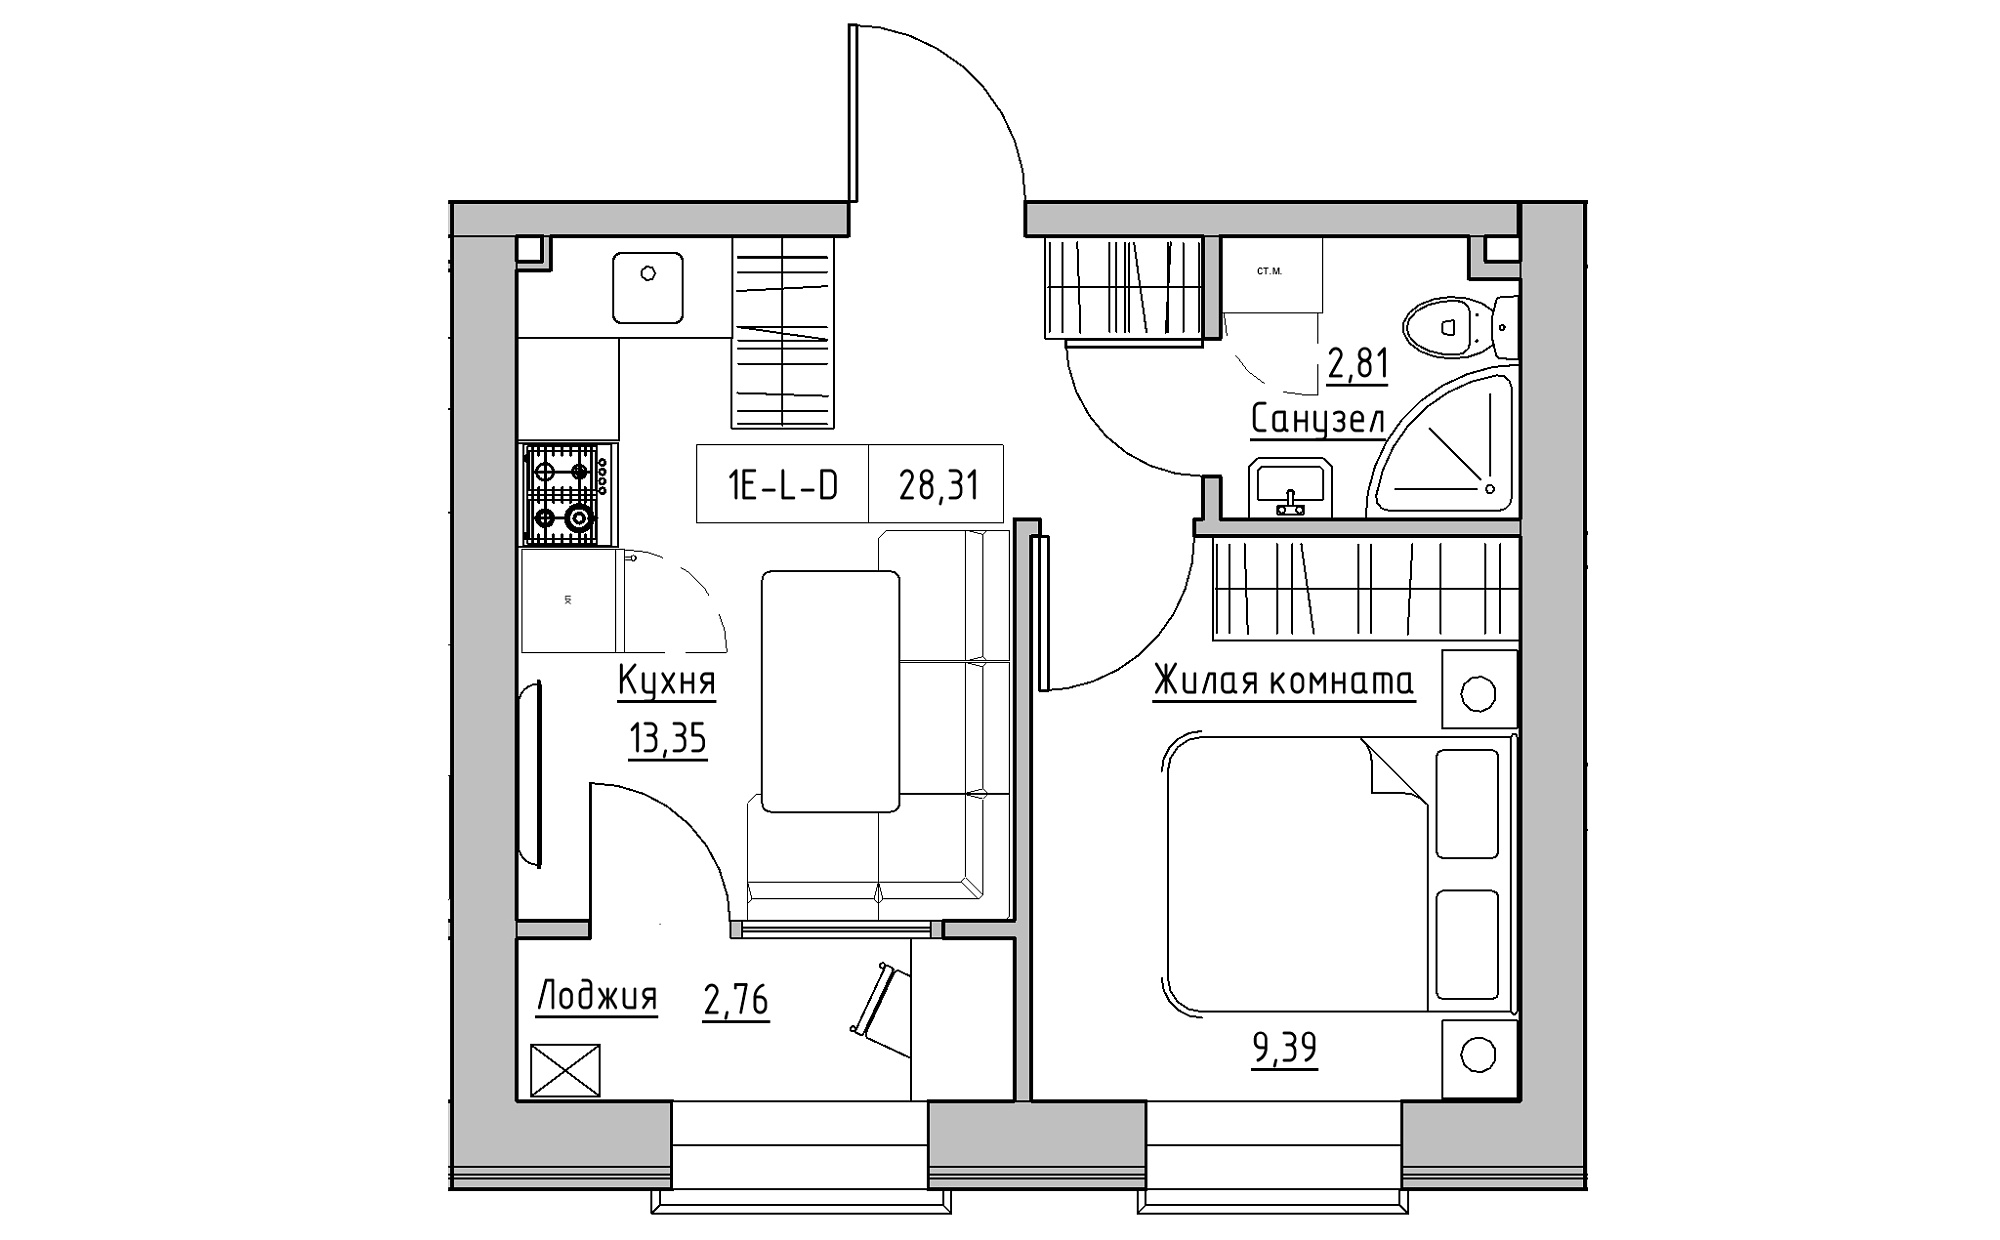 Planning 1-rm flats area 28.31m2, KS-022-02/0001.